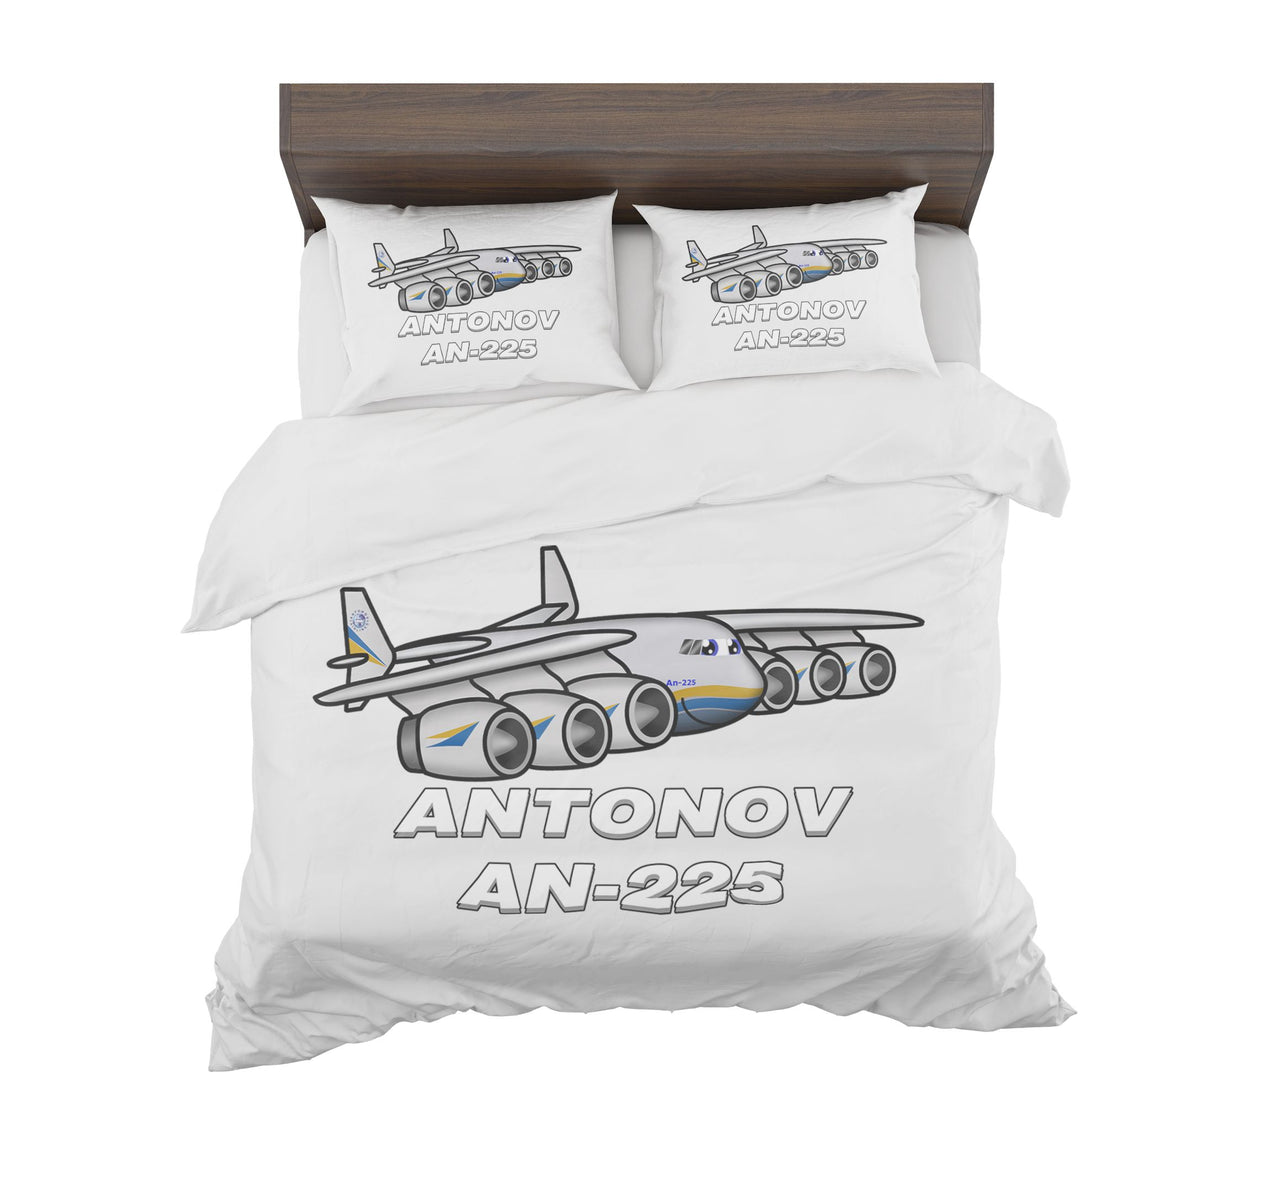 Antonov AN-225 (25) Designed Bedding Sets